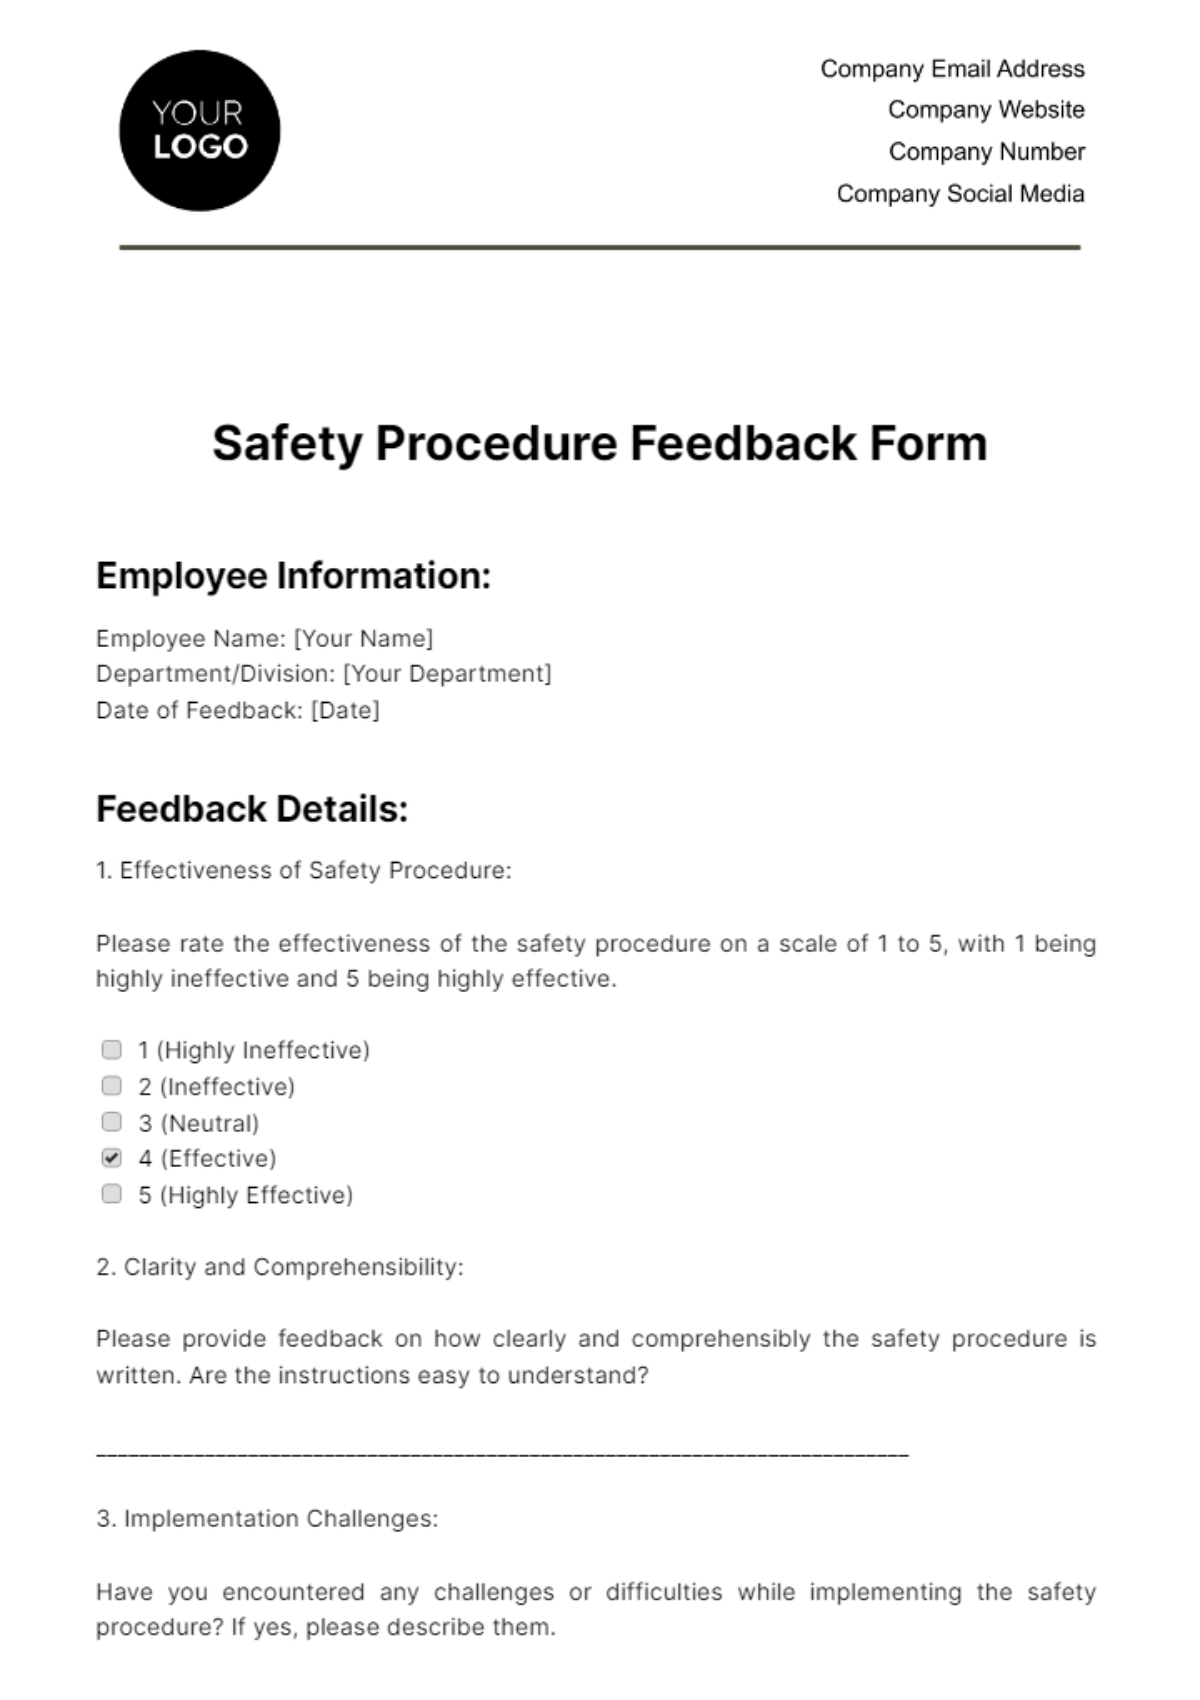 Safety Procedure Feedback Form HR Template